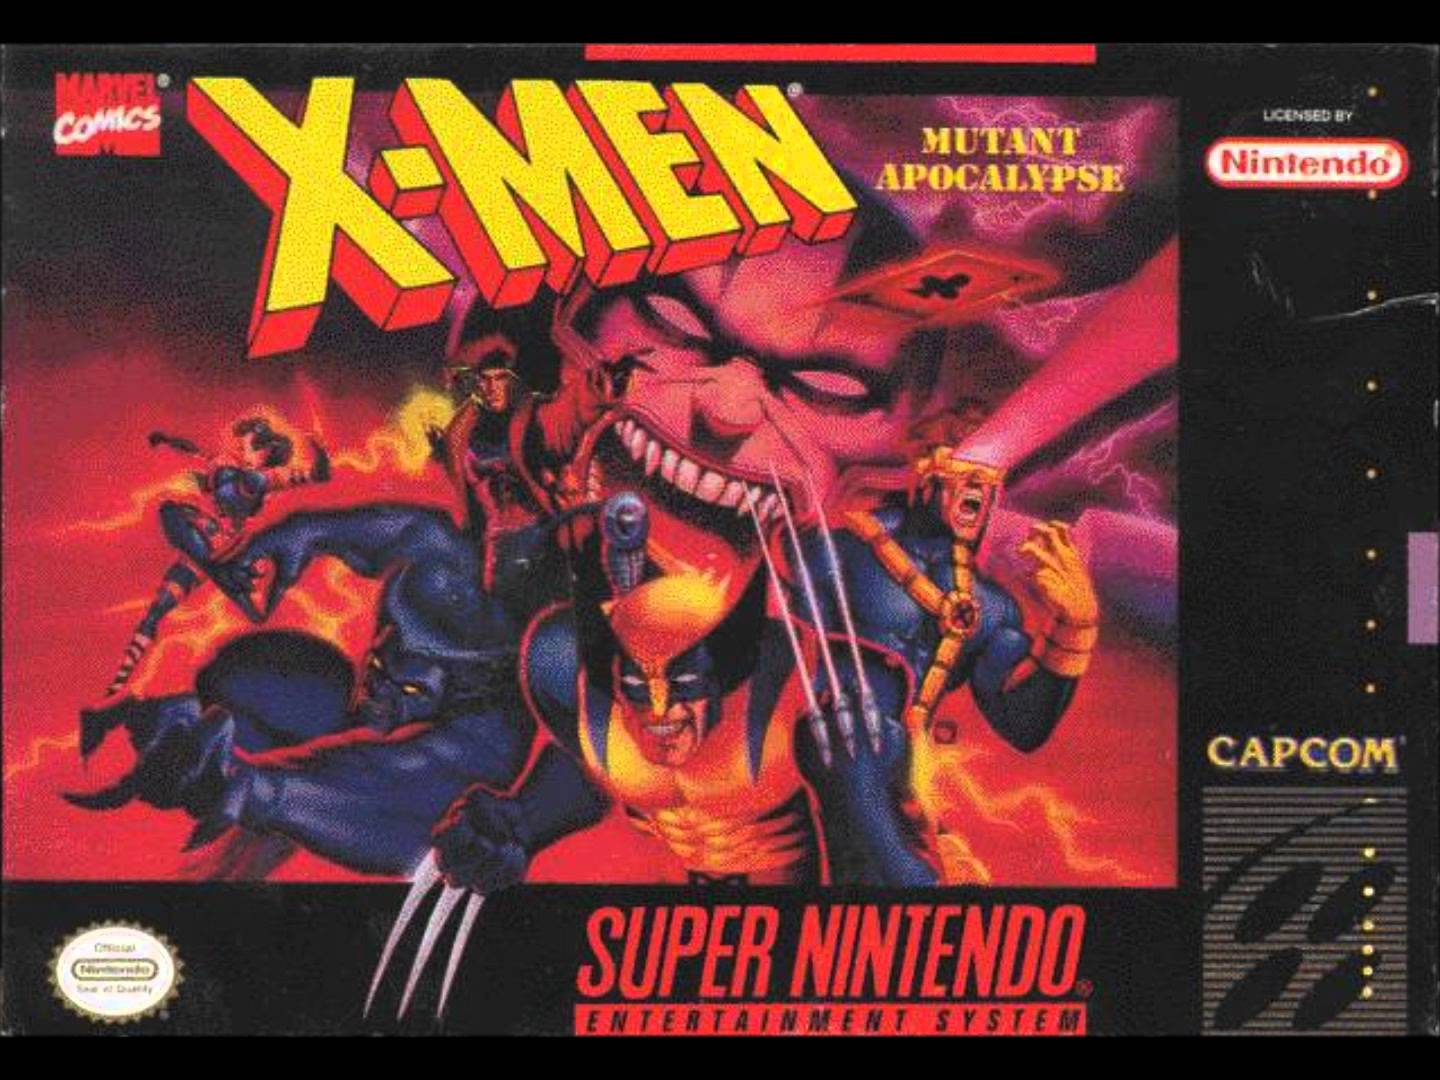 X-Men: Mutant Apocalypse #23